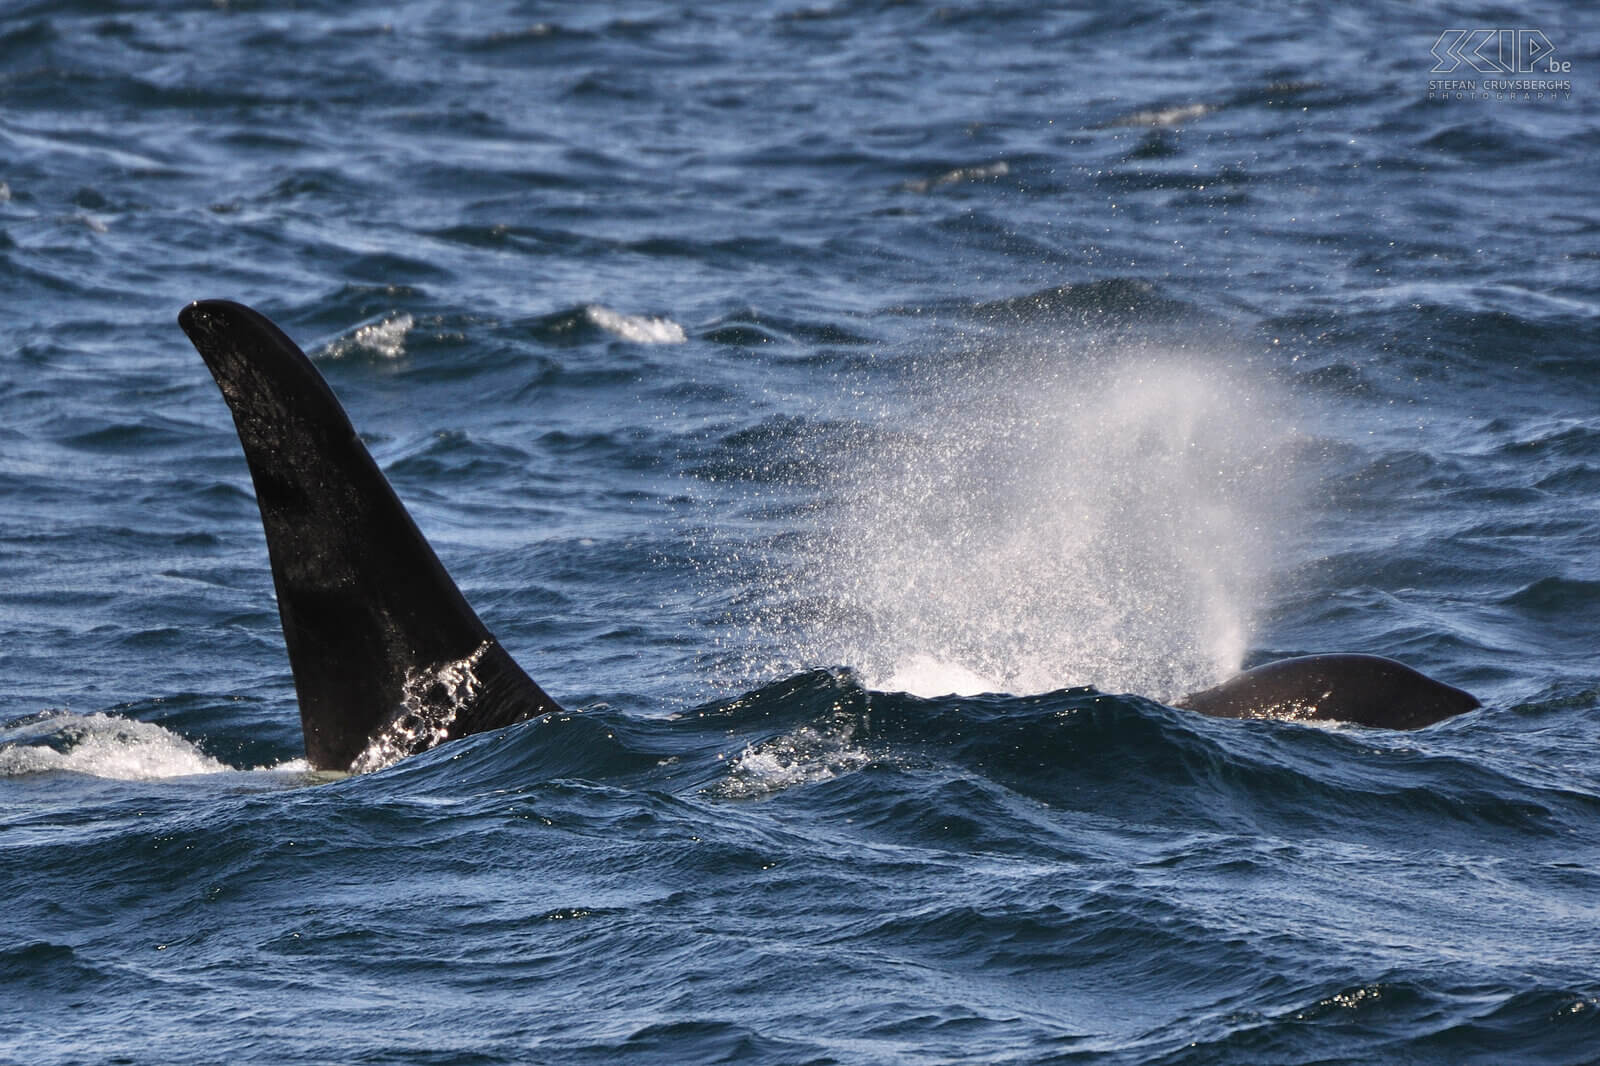 Telegraph Cove - Orca Orca (Killer whale/Orcinus orca) Stefan Cruysberghs